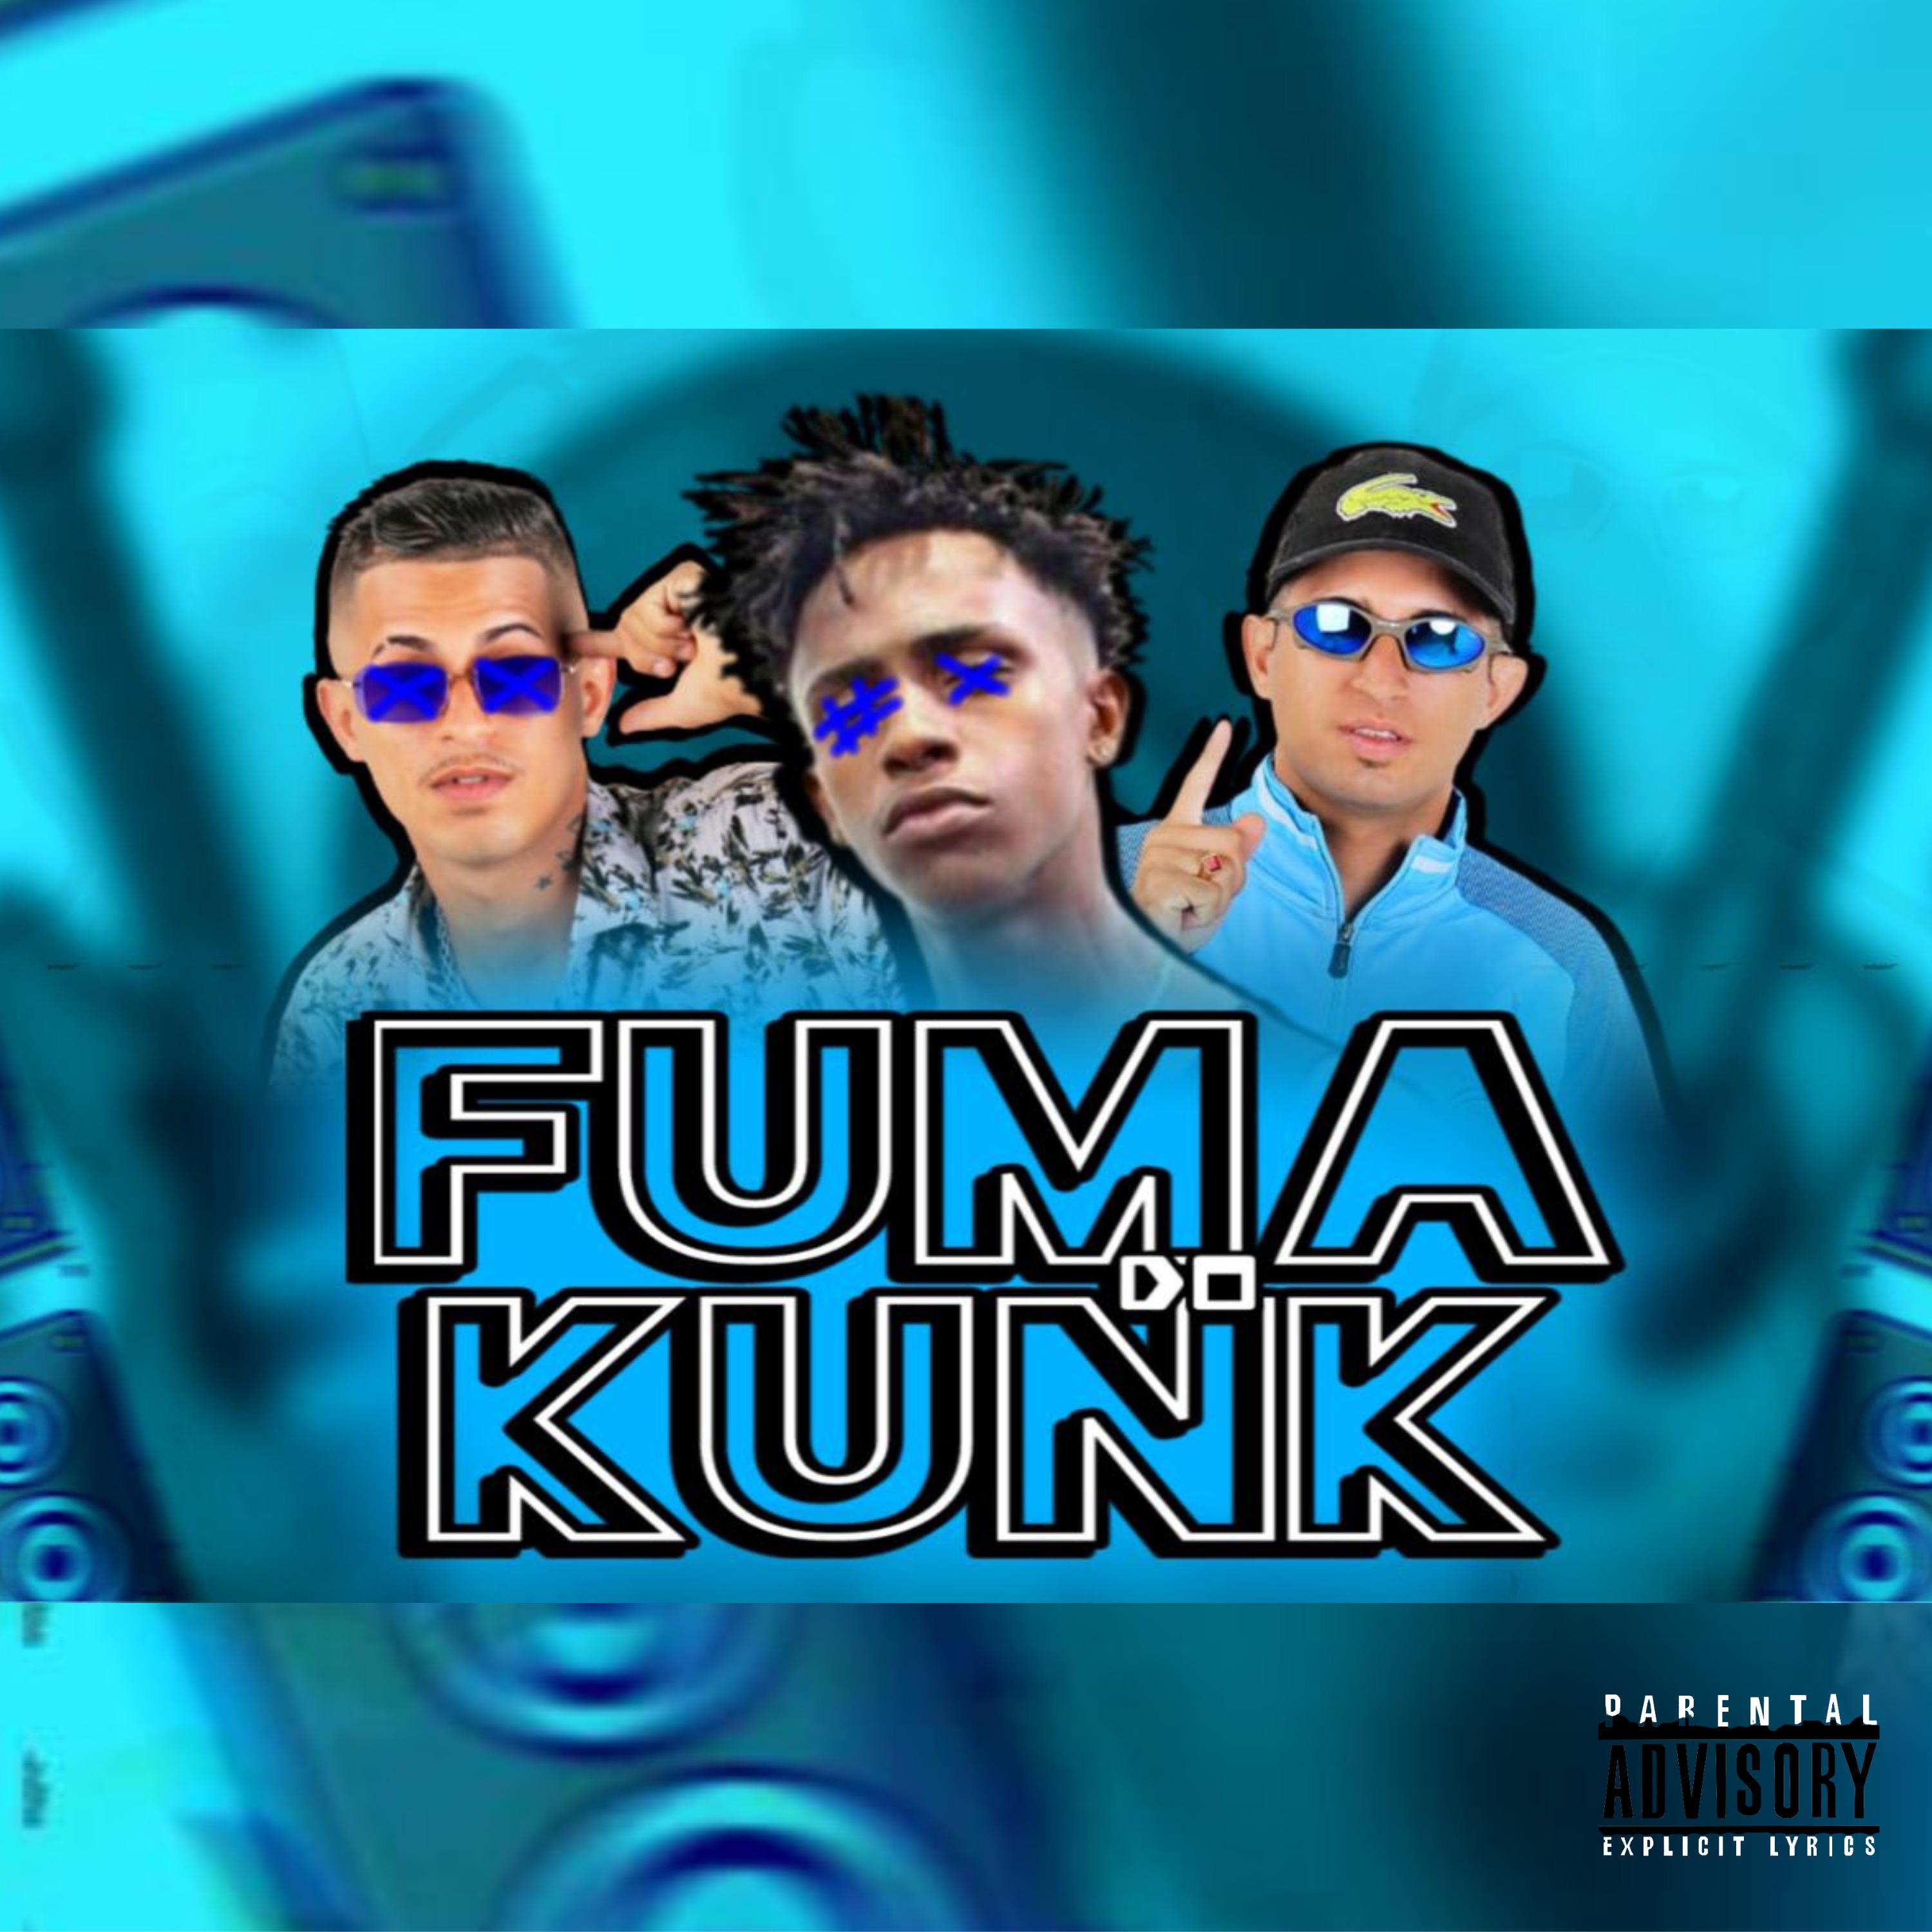 Постер альбома Fuma do Kunk